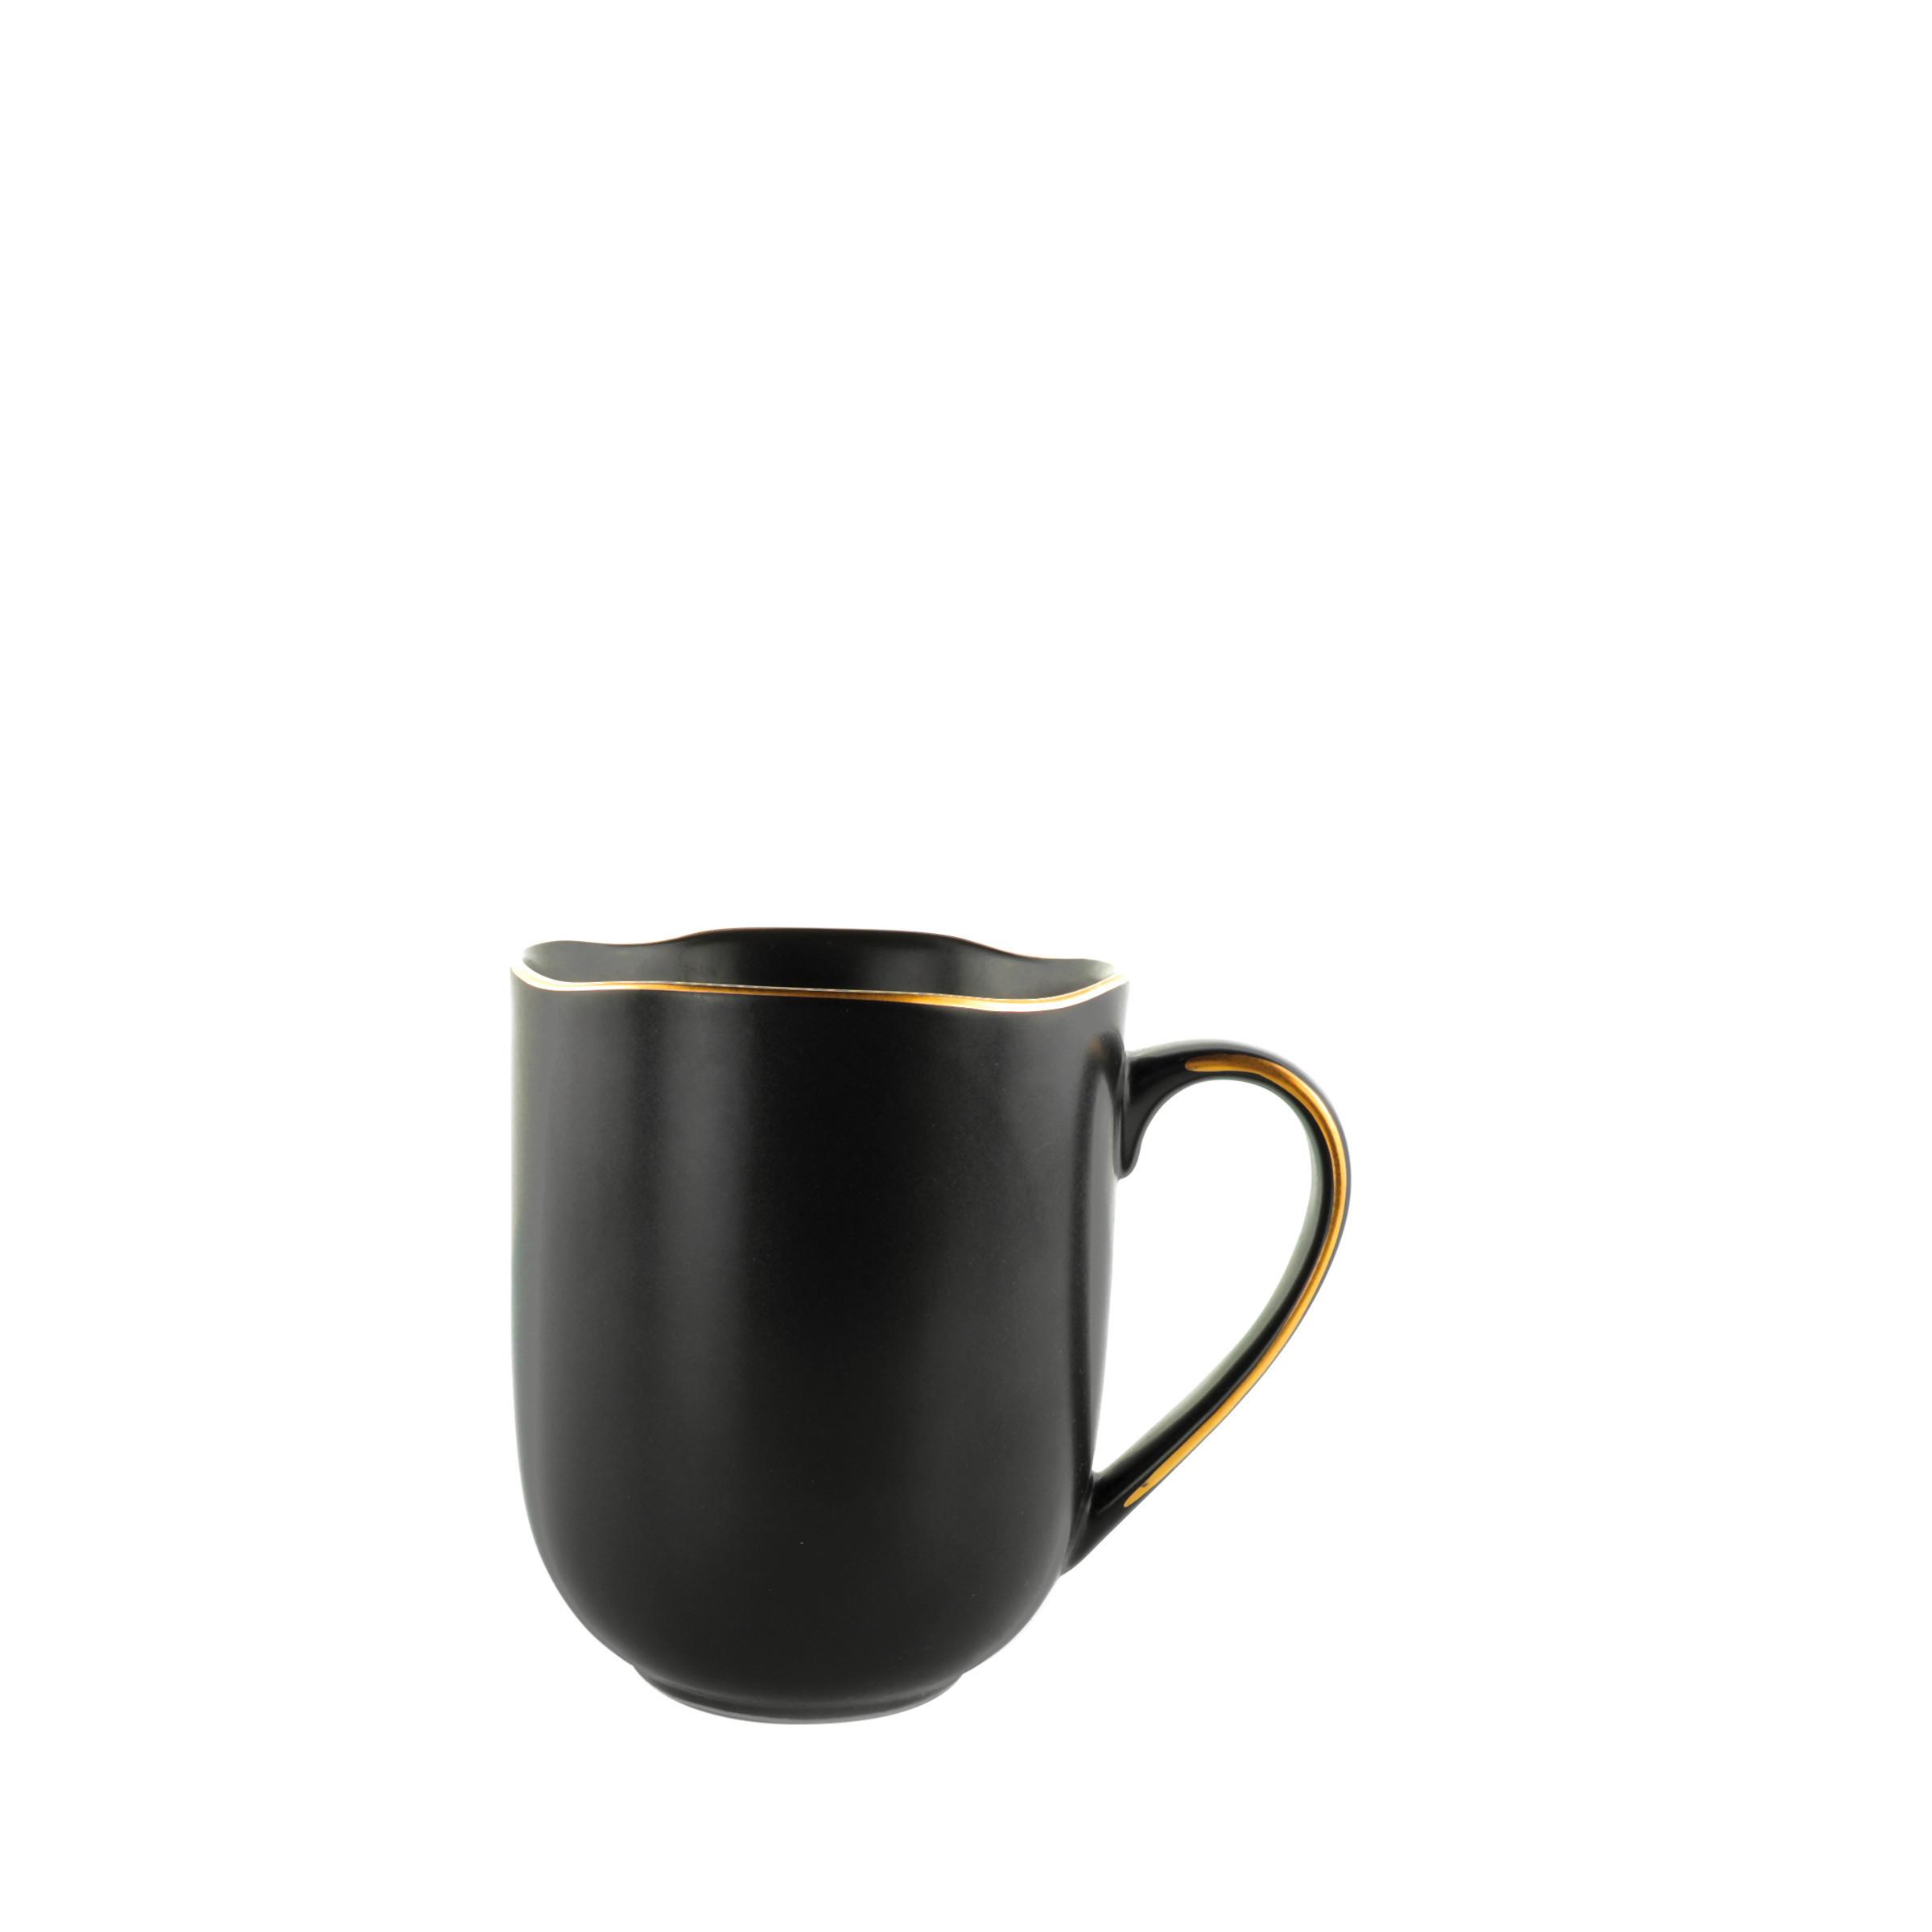 Kaffeebecher Onix aus Porzellan ca. 350ml - Goldfarben/Schwarz, Modern, Keramik (350ml) - Premium Living